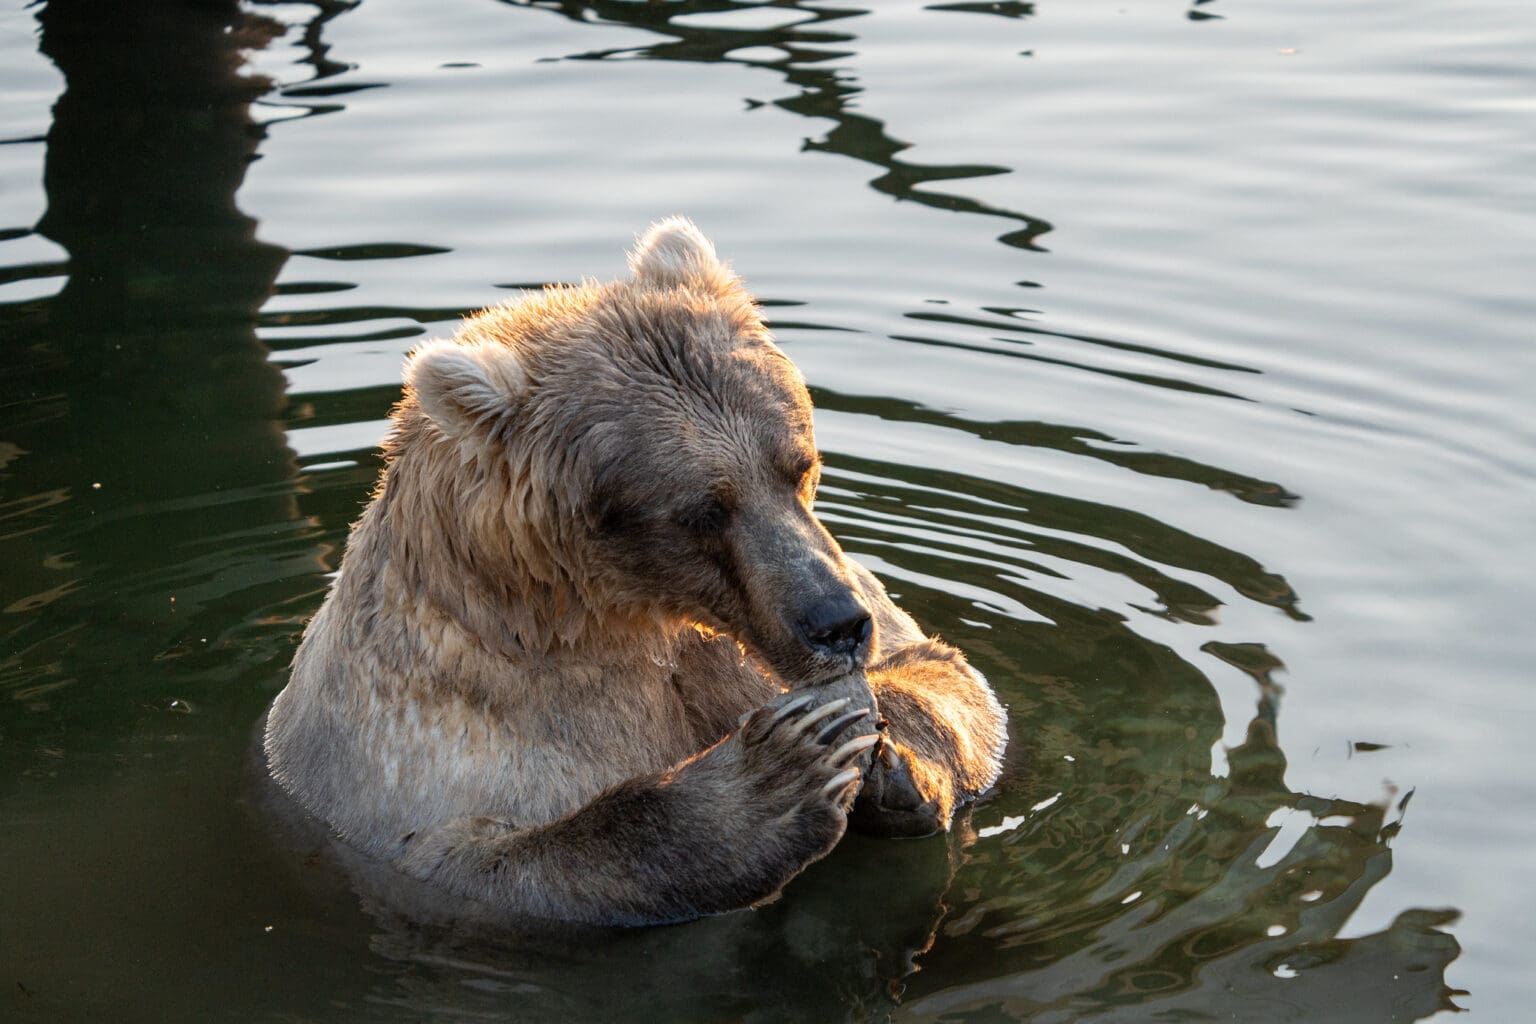 Holly, a bear, enjoys the serene waters.